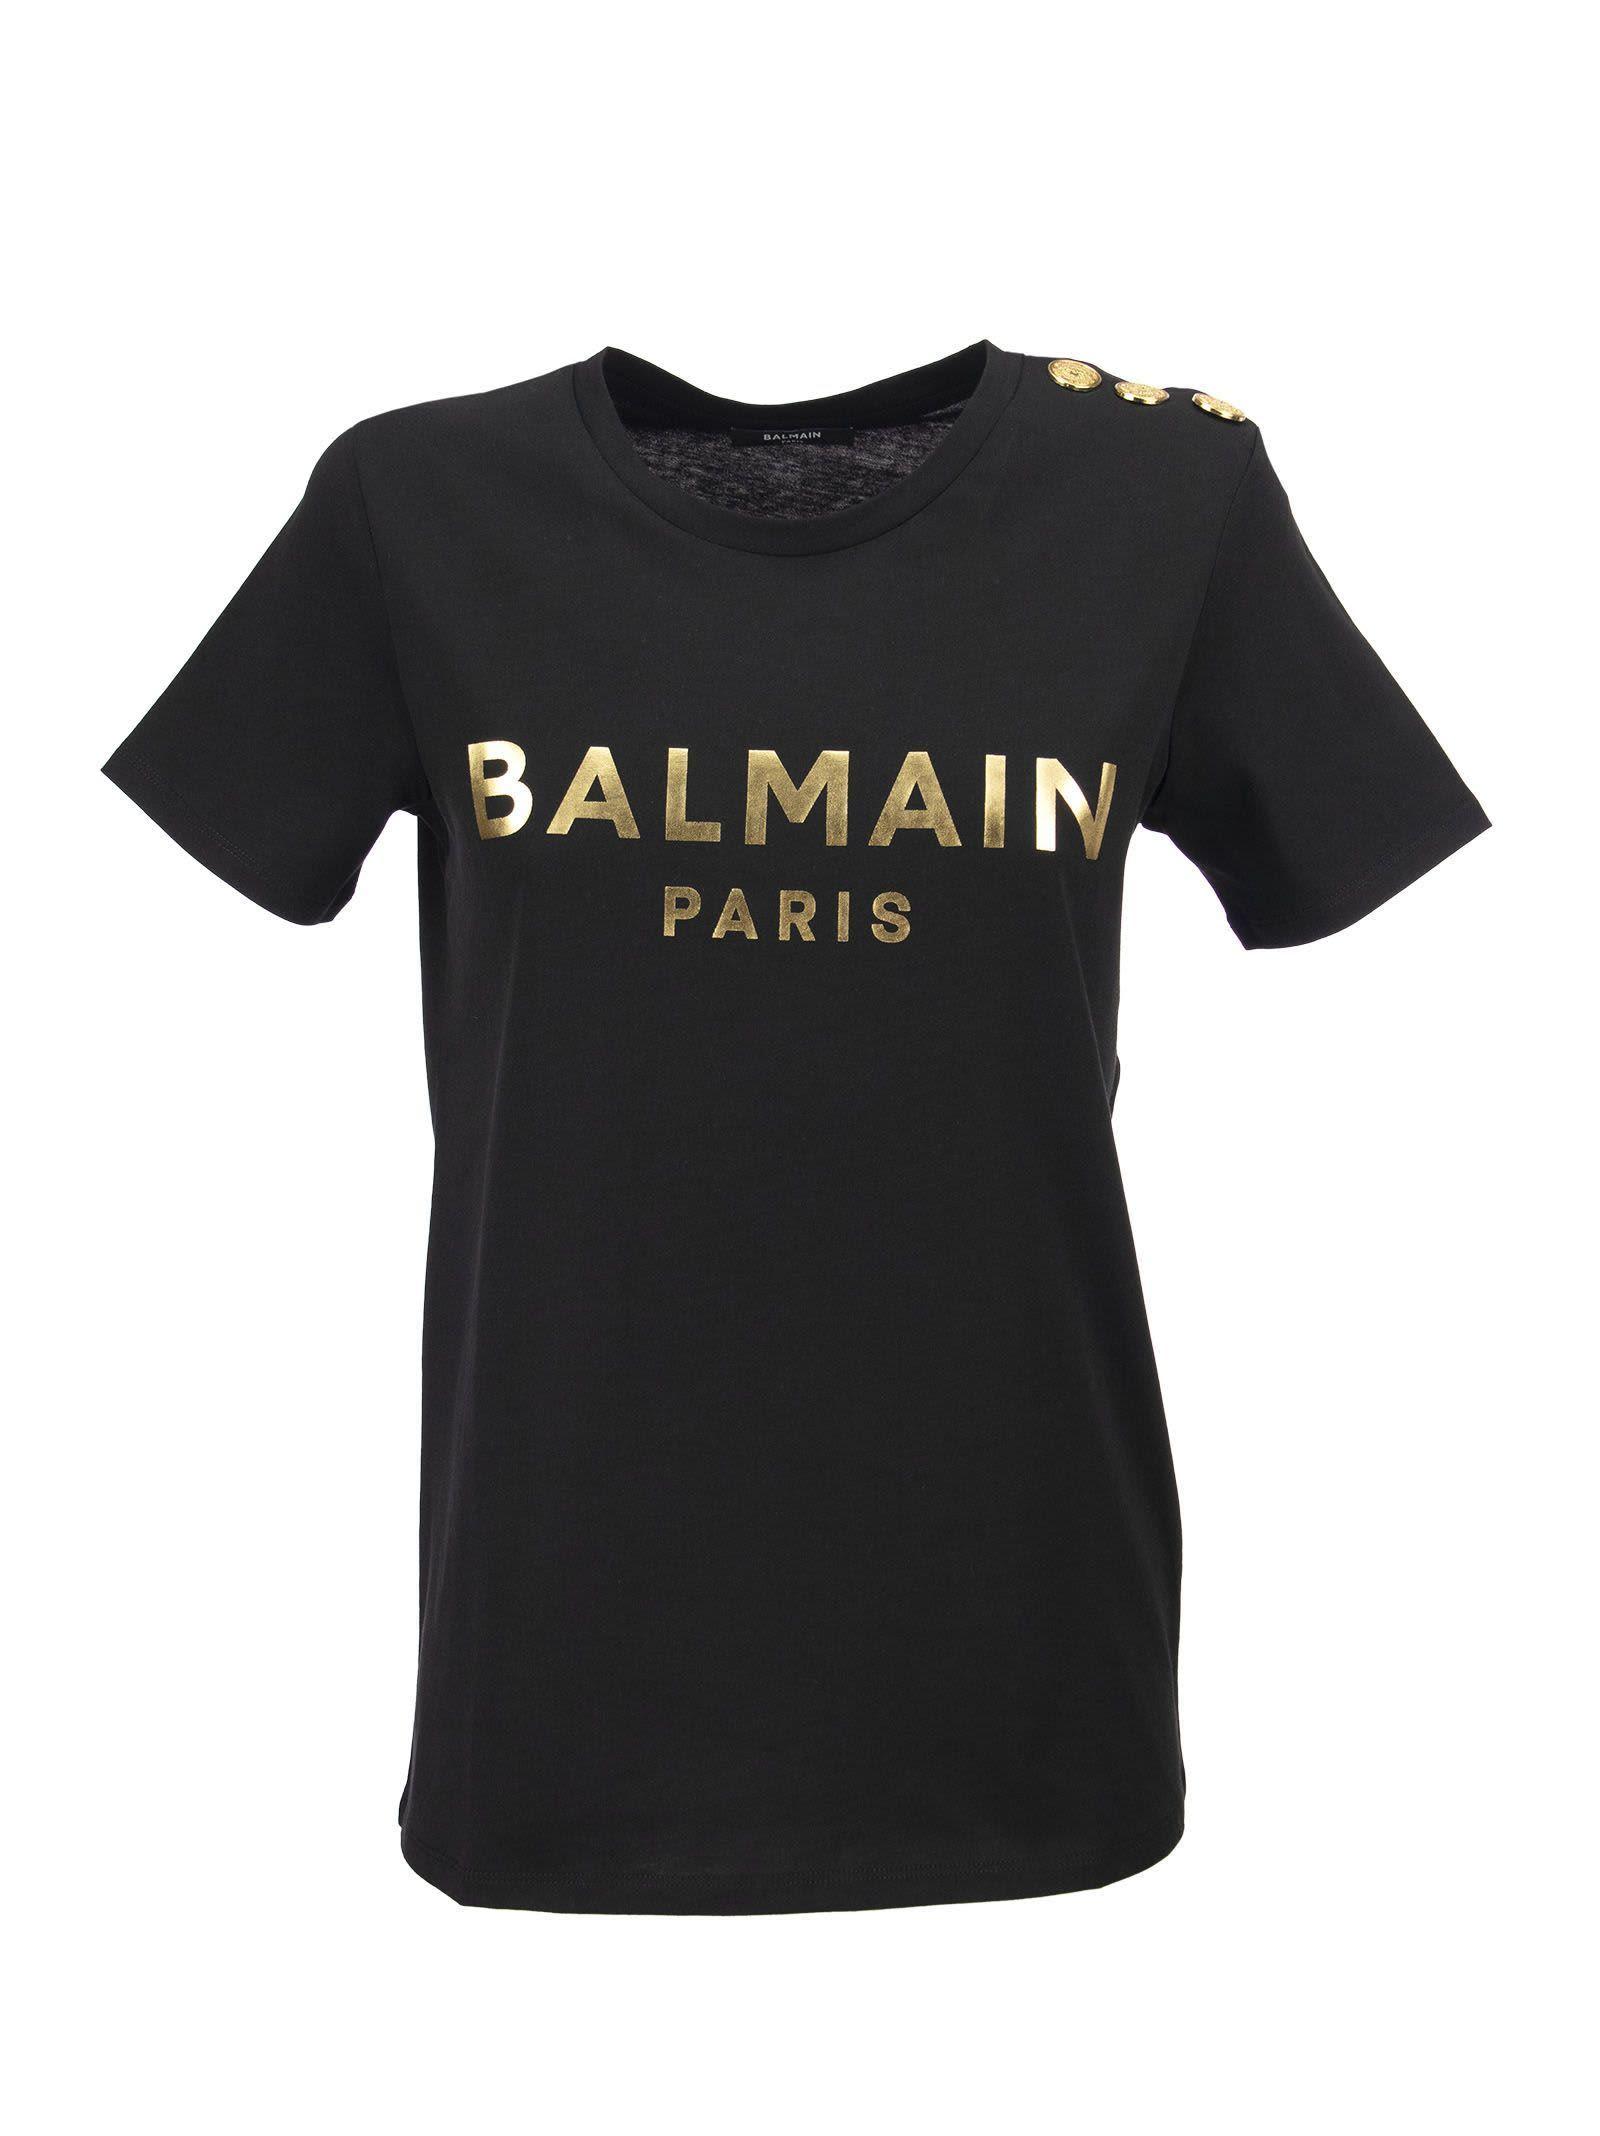 Balmain Gold Print T-shirt in Black | Lyst